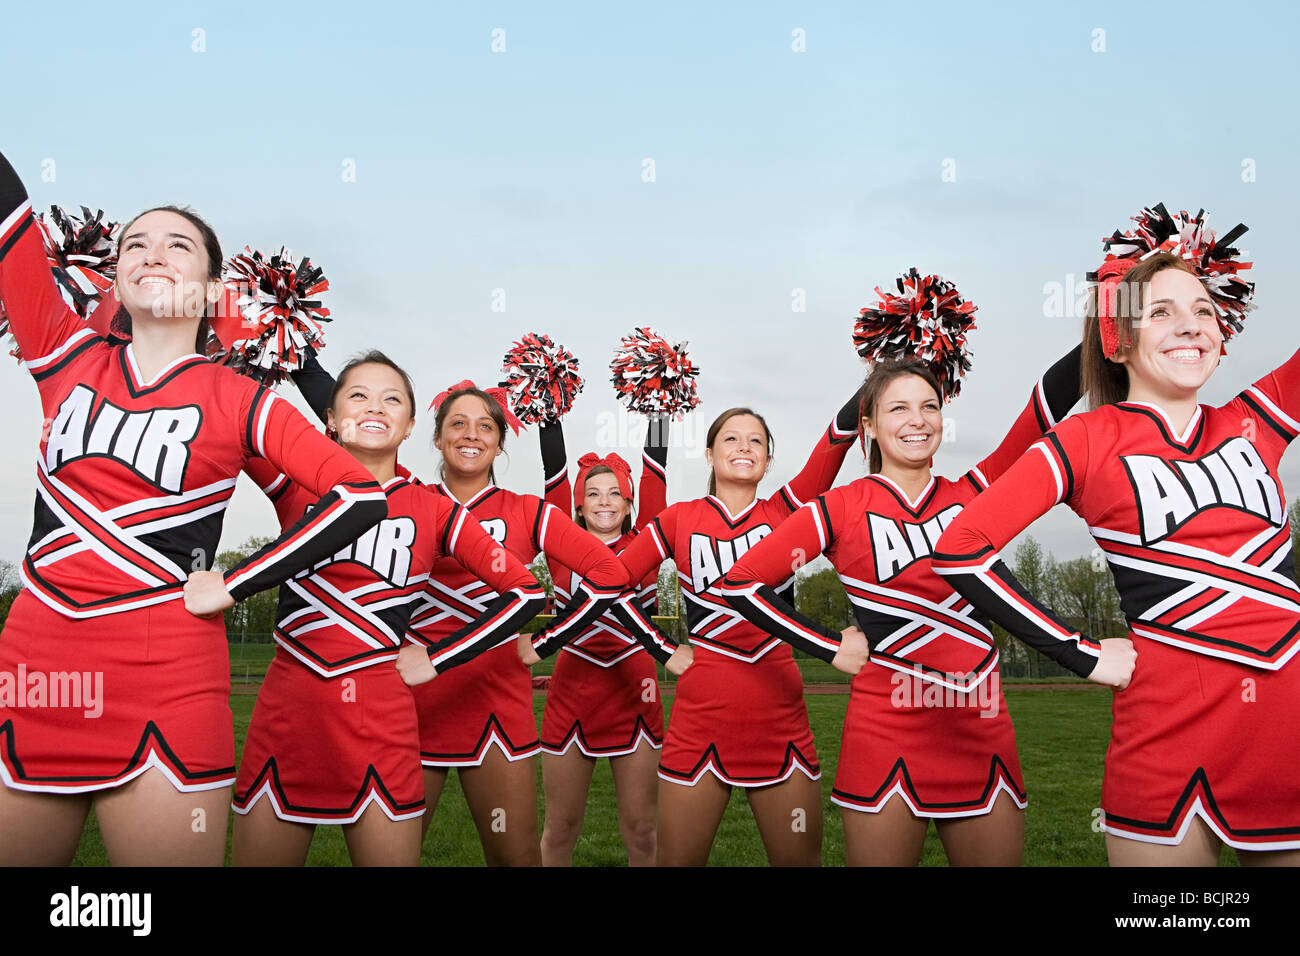 Cheerleaders performing routine Stock Photo